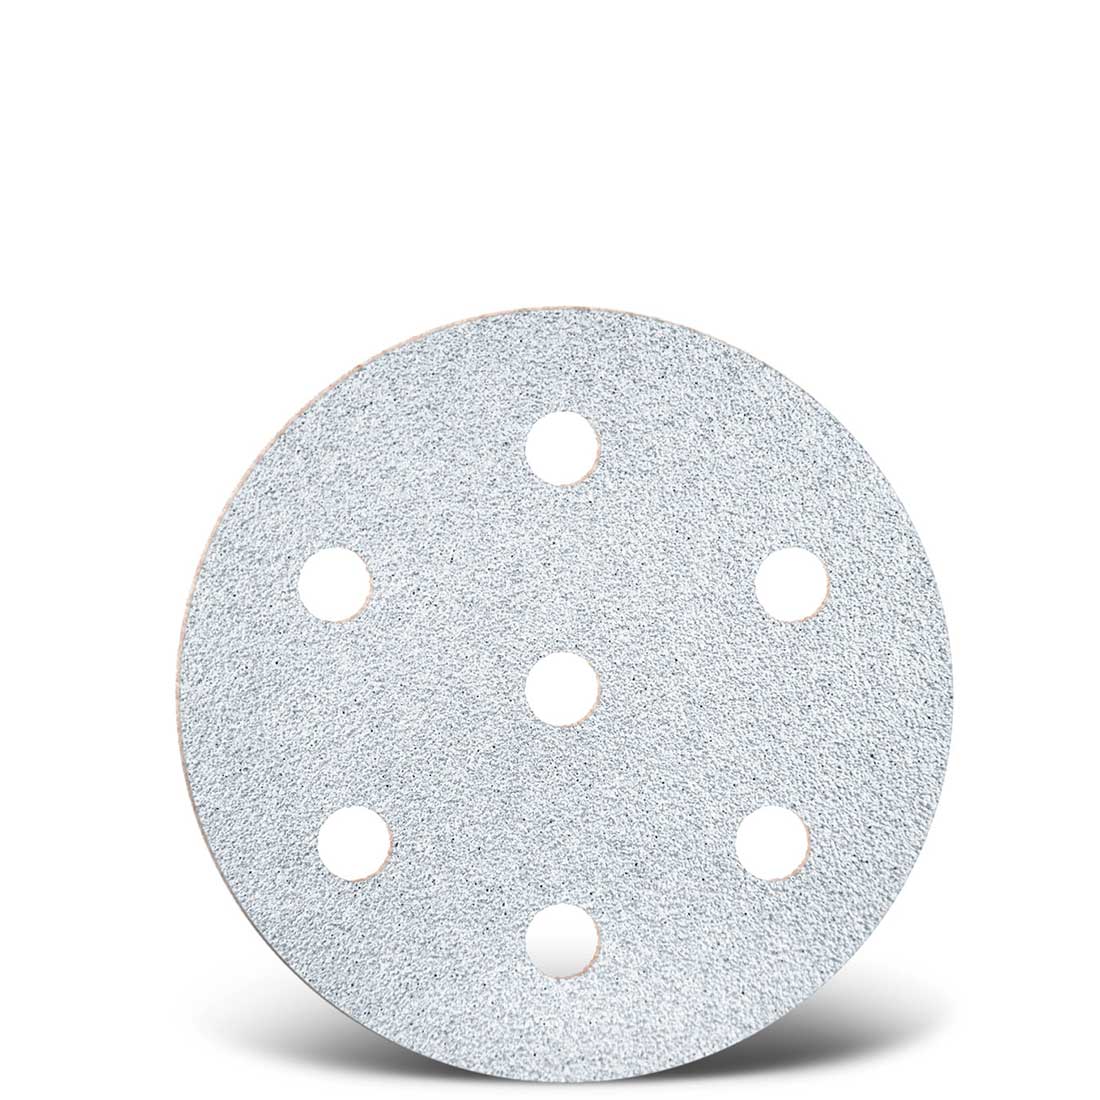 MENZER hook & loop sanding discs for random orbital sanders, G40–400, Ø 90 mm / 7 hole / stearated aluminium oxide